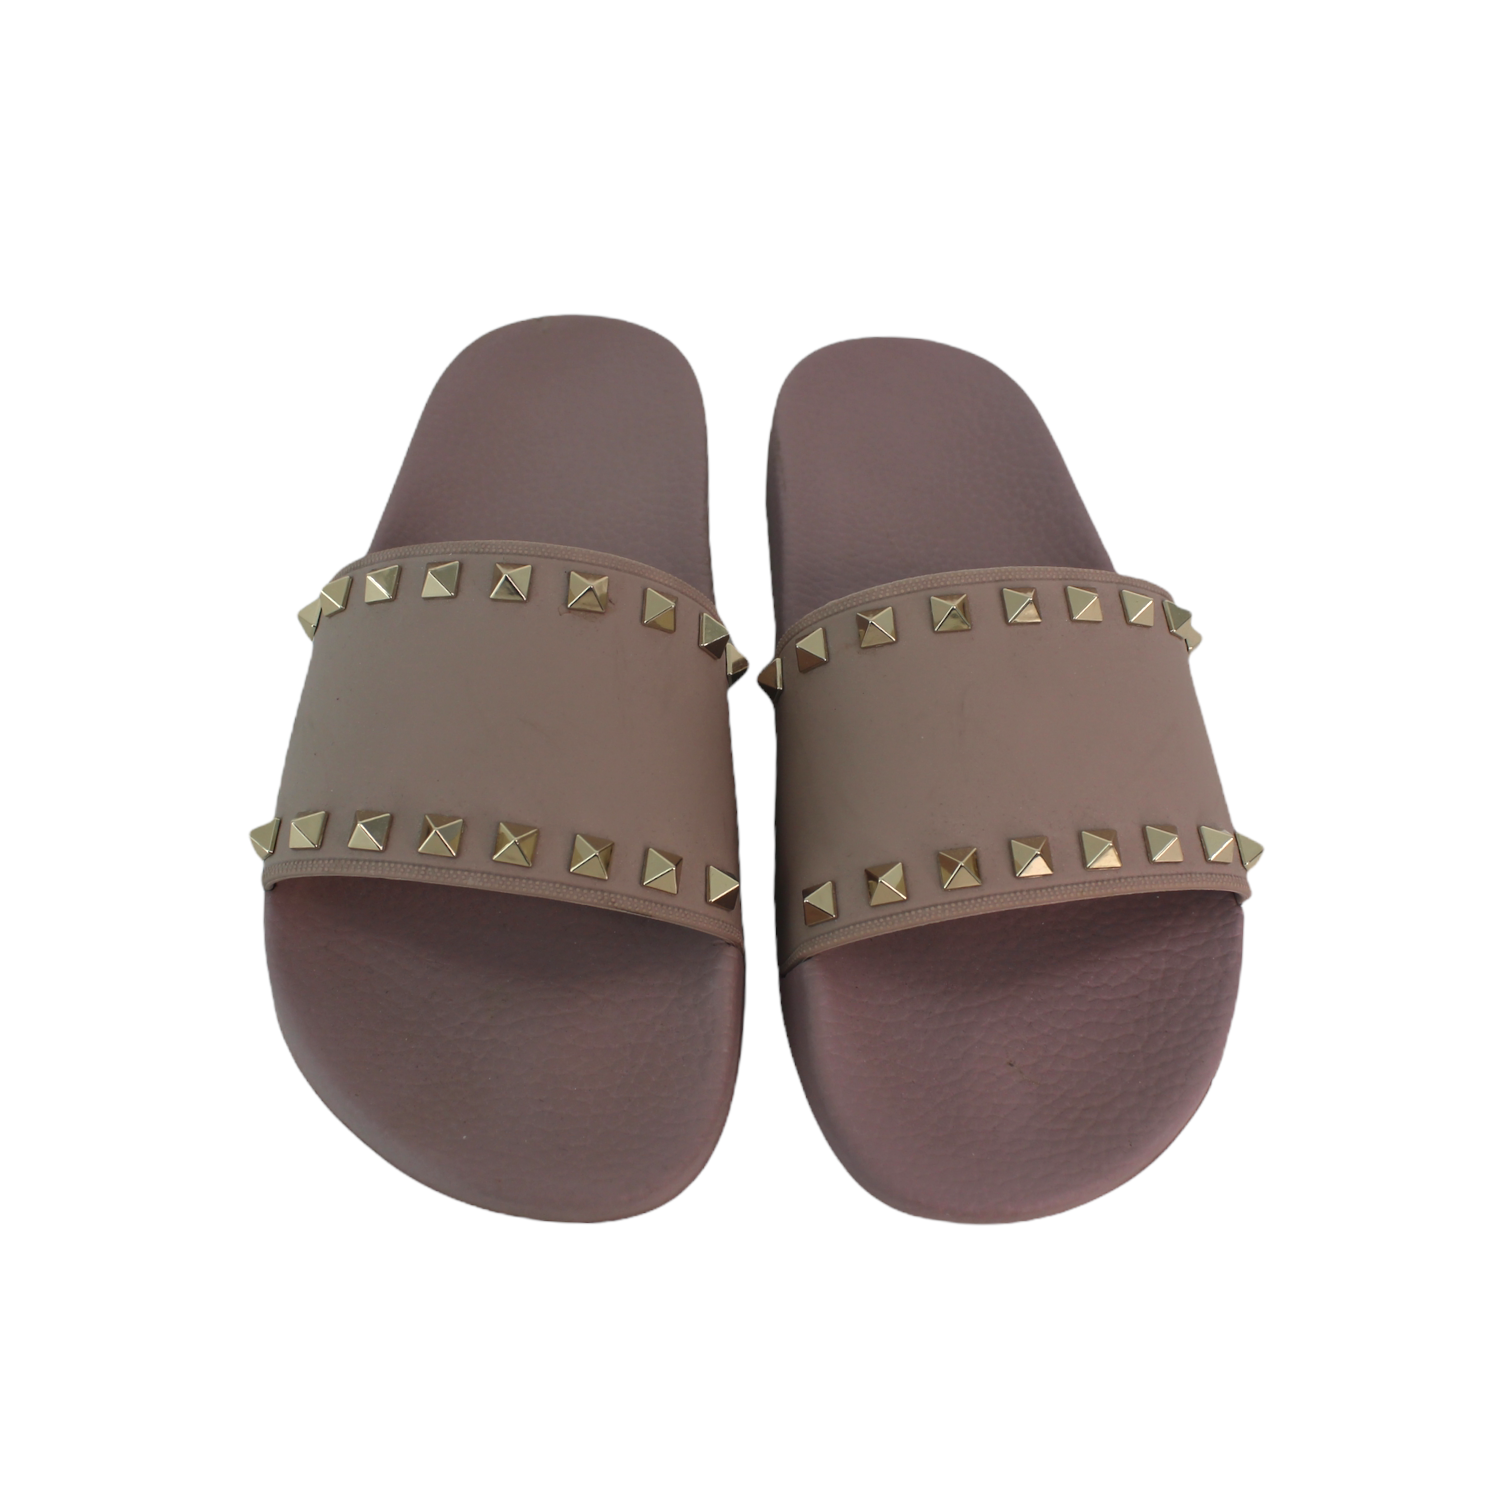 Valentino Rockstud Slide Sandals size 39 EU - The Luxury Flavor